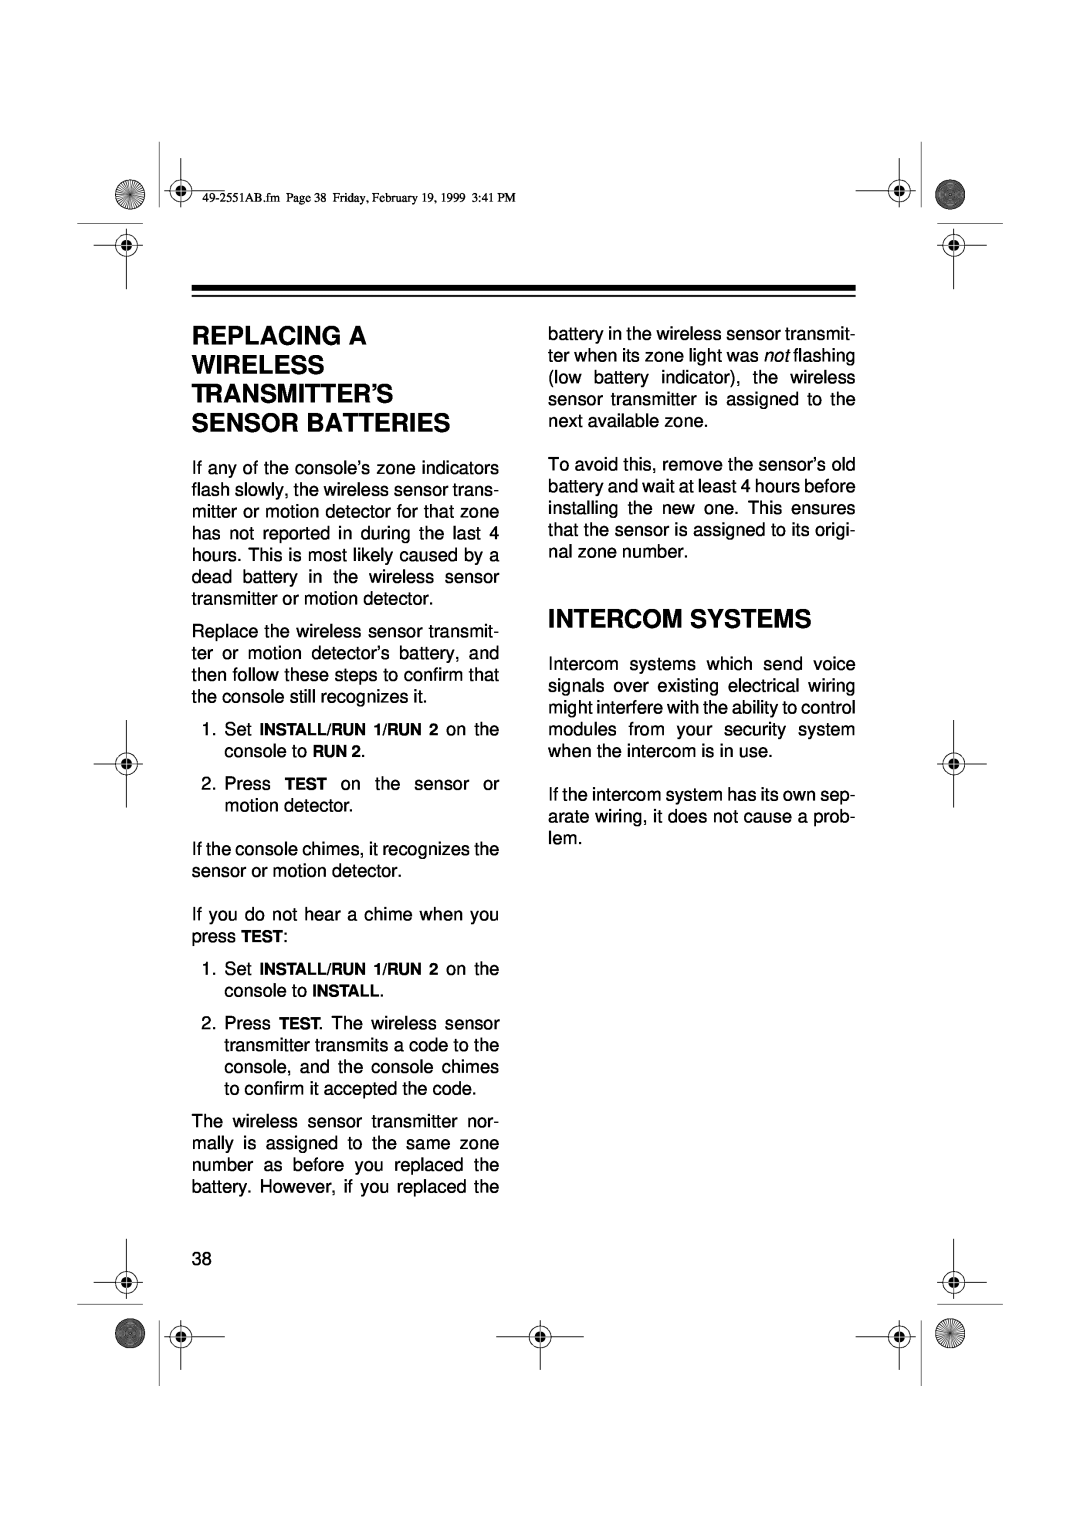 Radio Shack 49-2551A owner manual Intercom Systems 